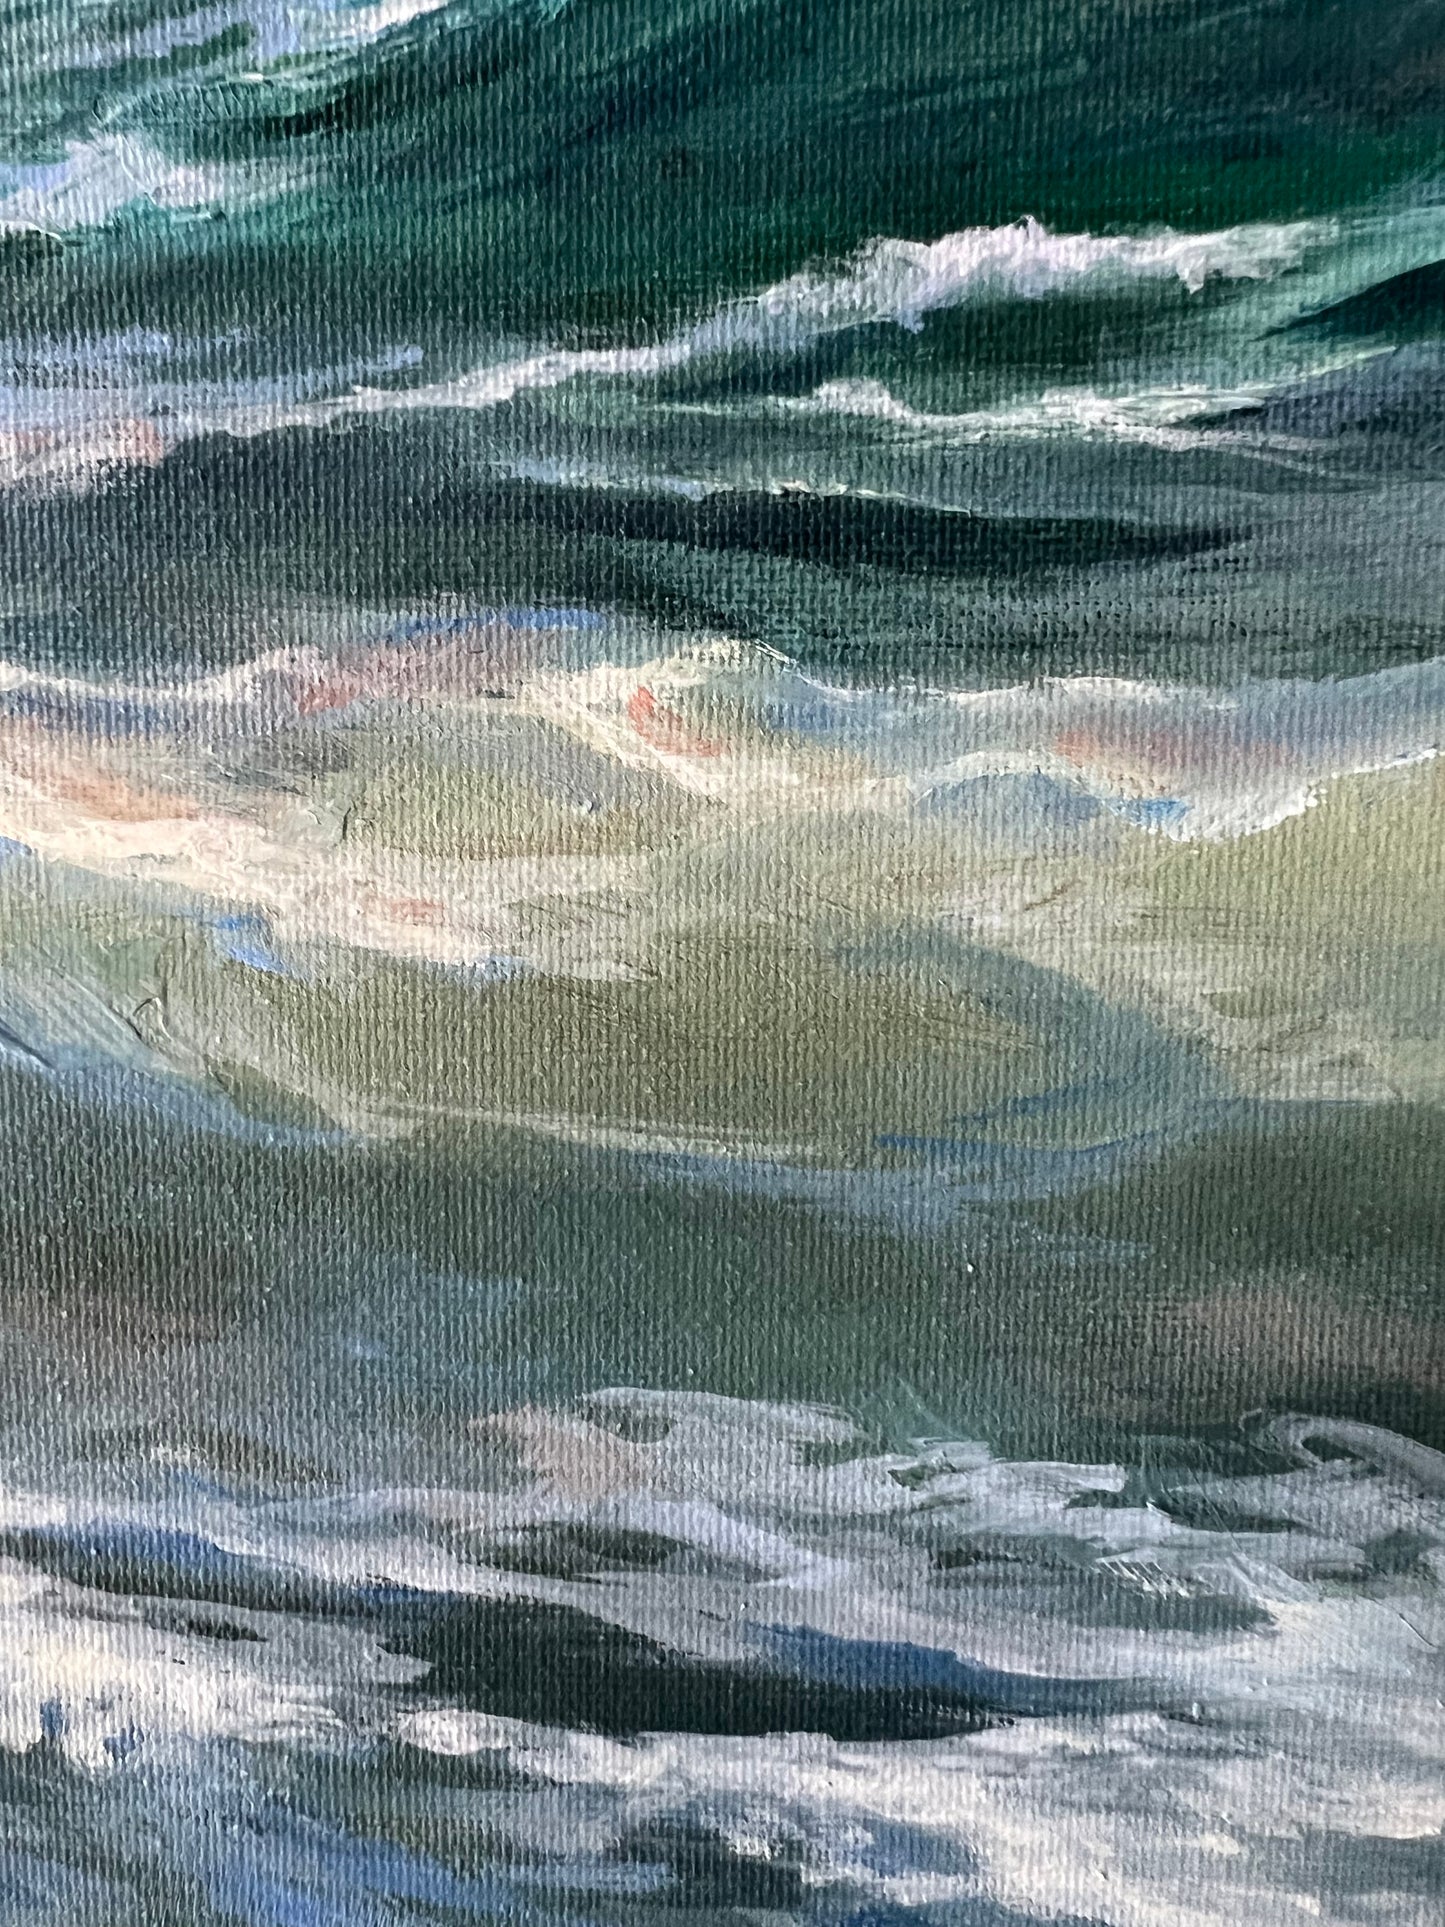 My Happy Place, original oil ocean painting